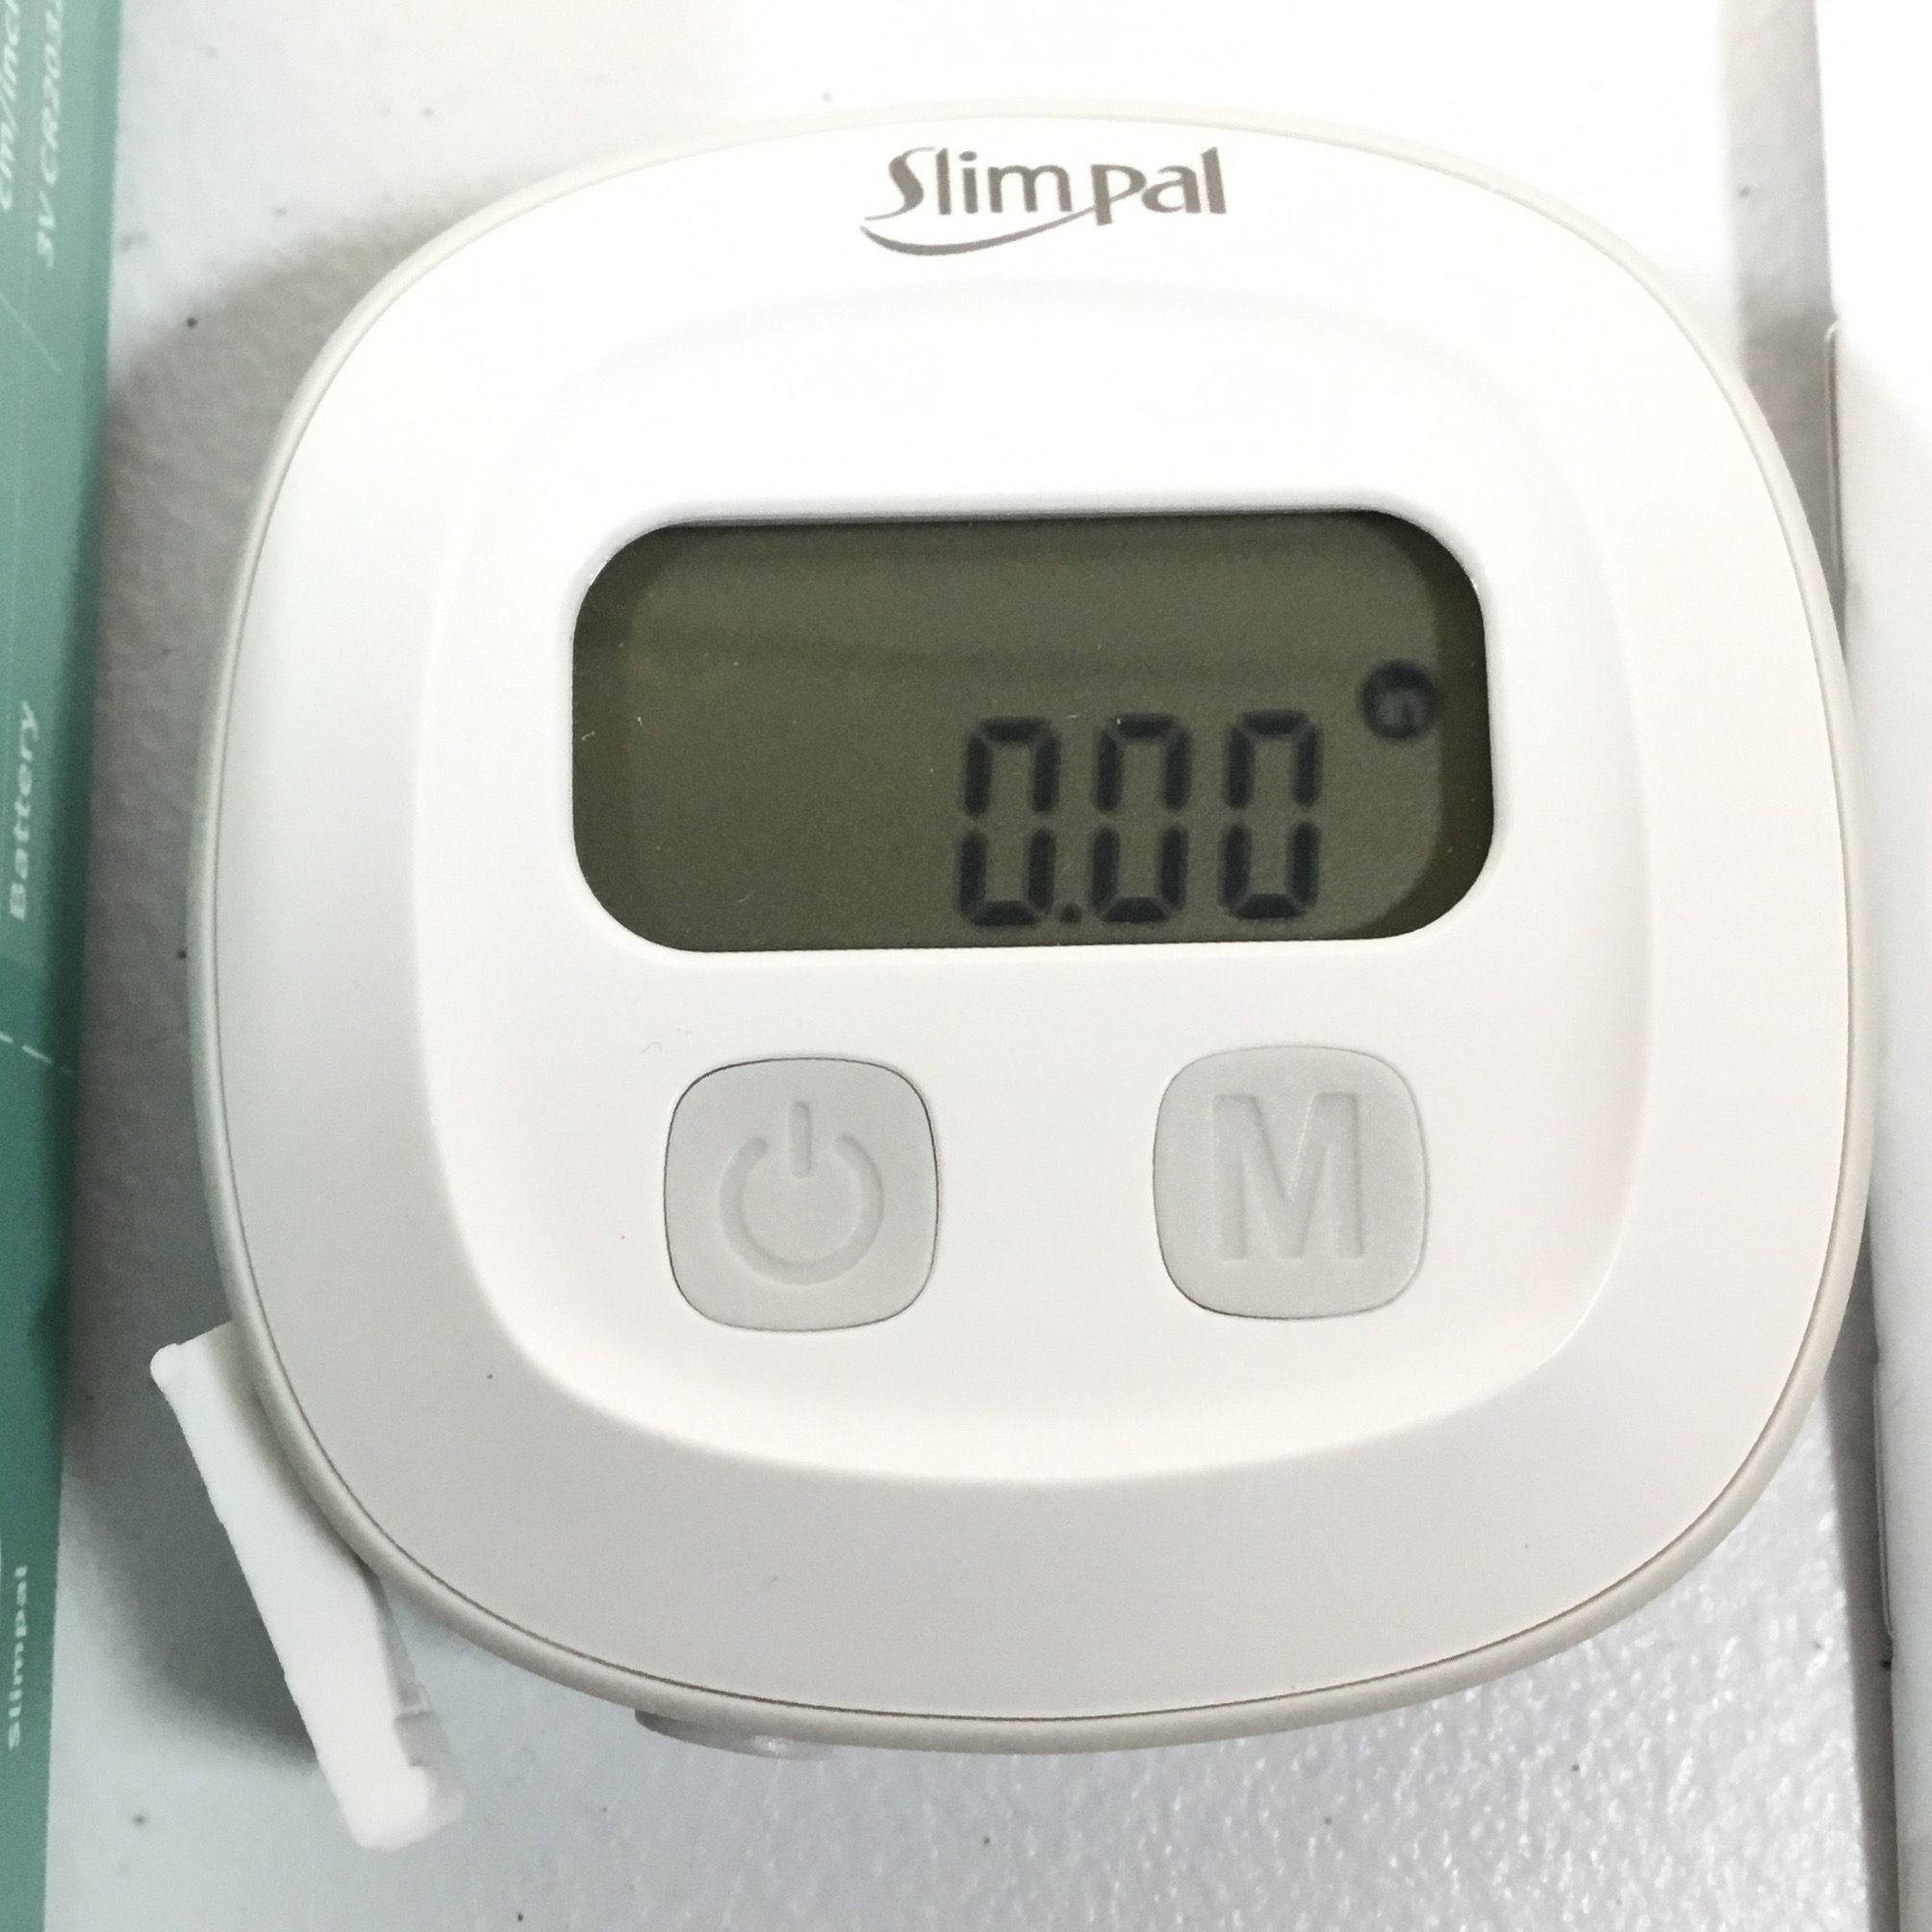  Slimpal Smart Body Tape Measure, Measuring Tape for